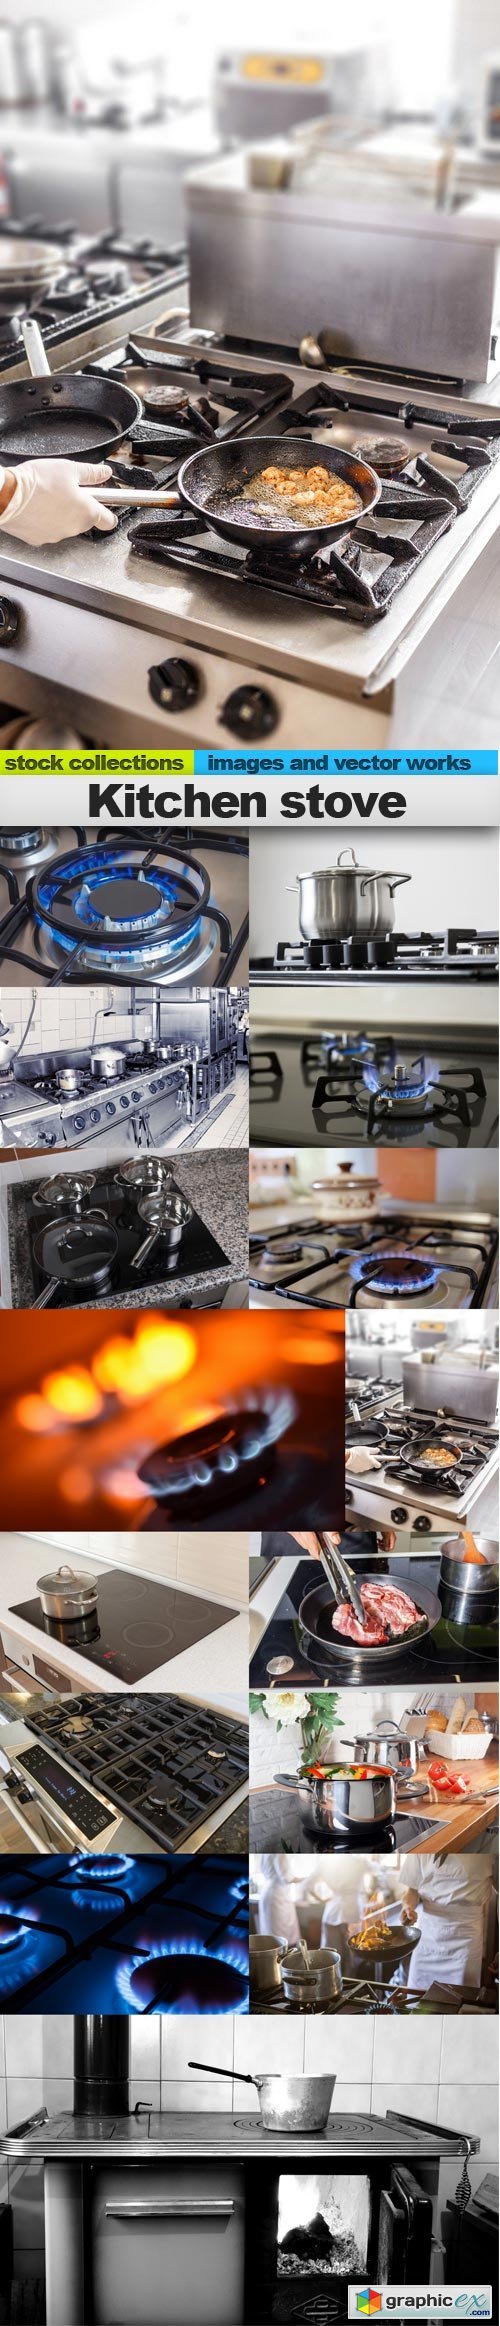 Kitchen stove, 15 x UHQ JPEG